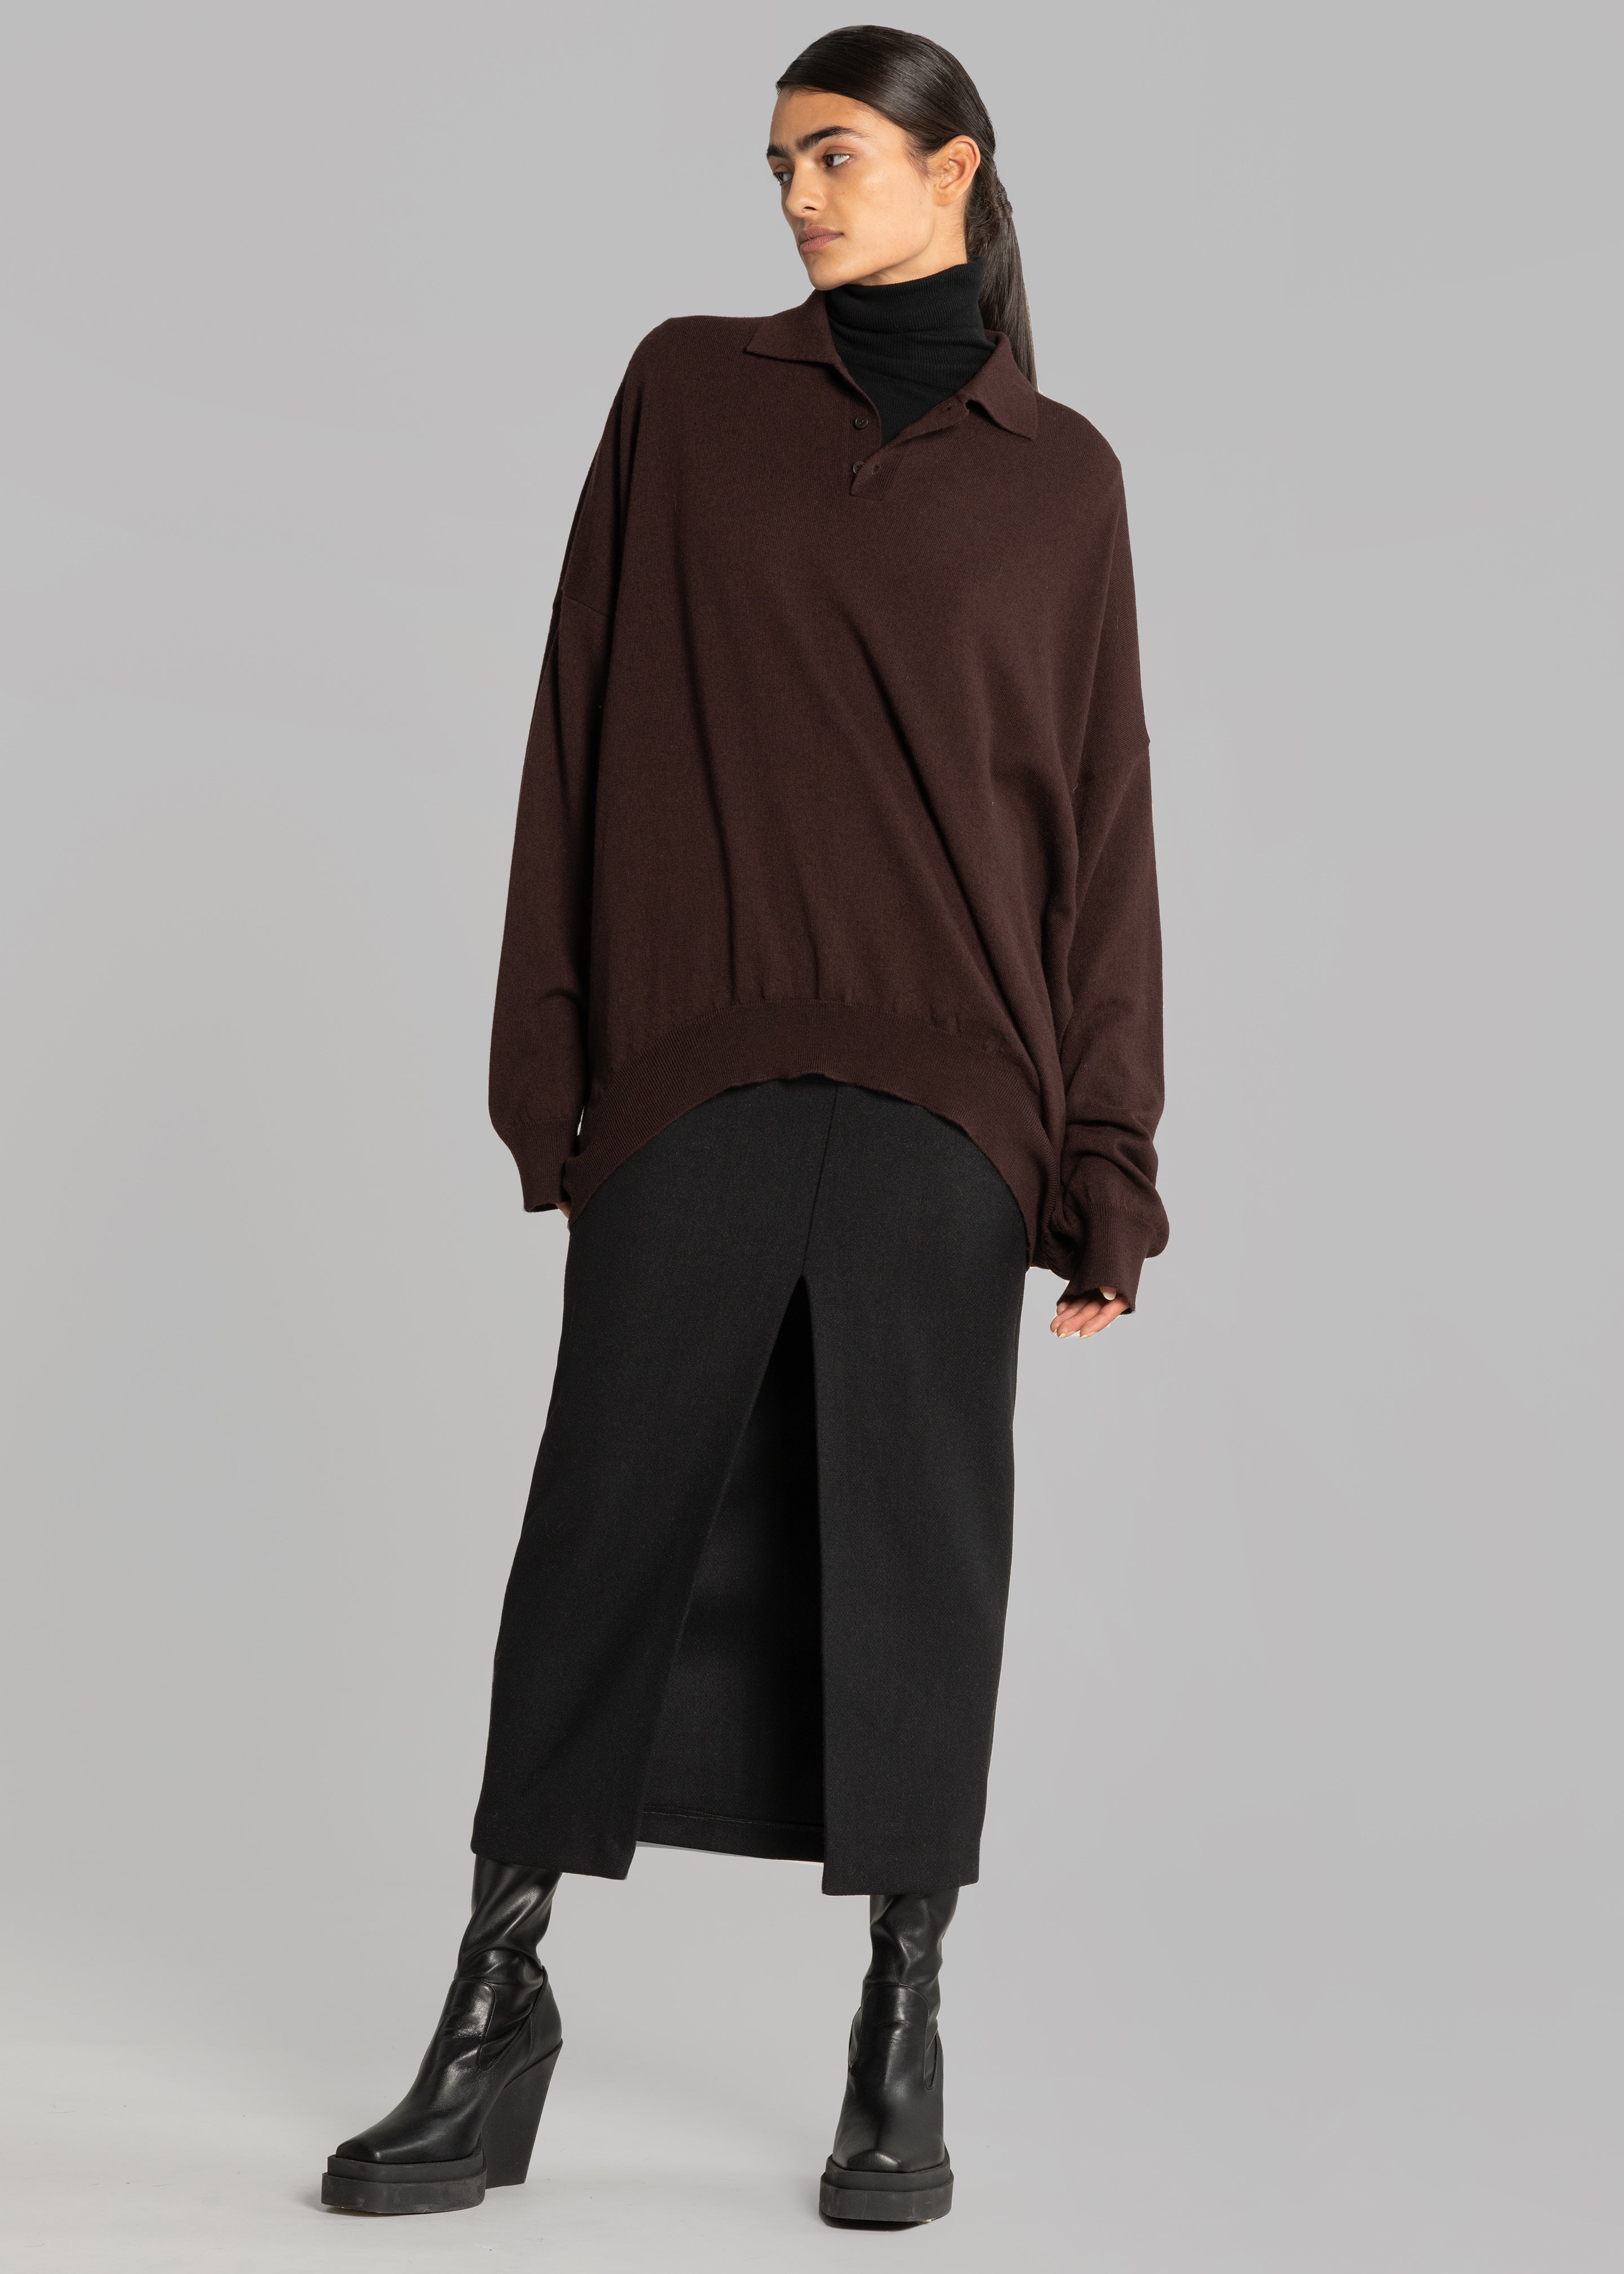 Neasi Wool-Blend Pencil Skirt - Black - 6